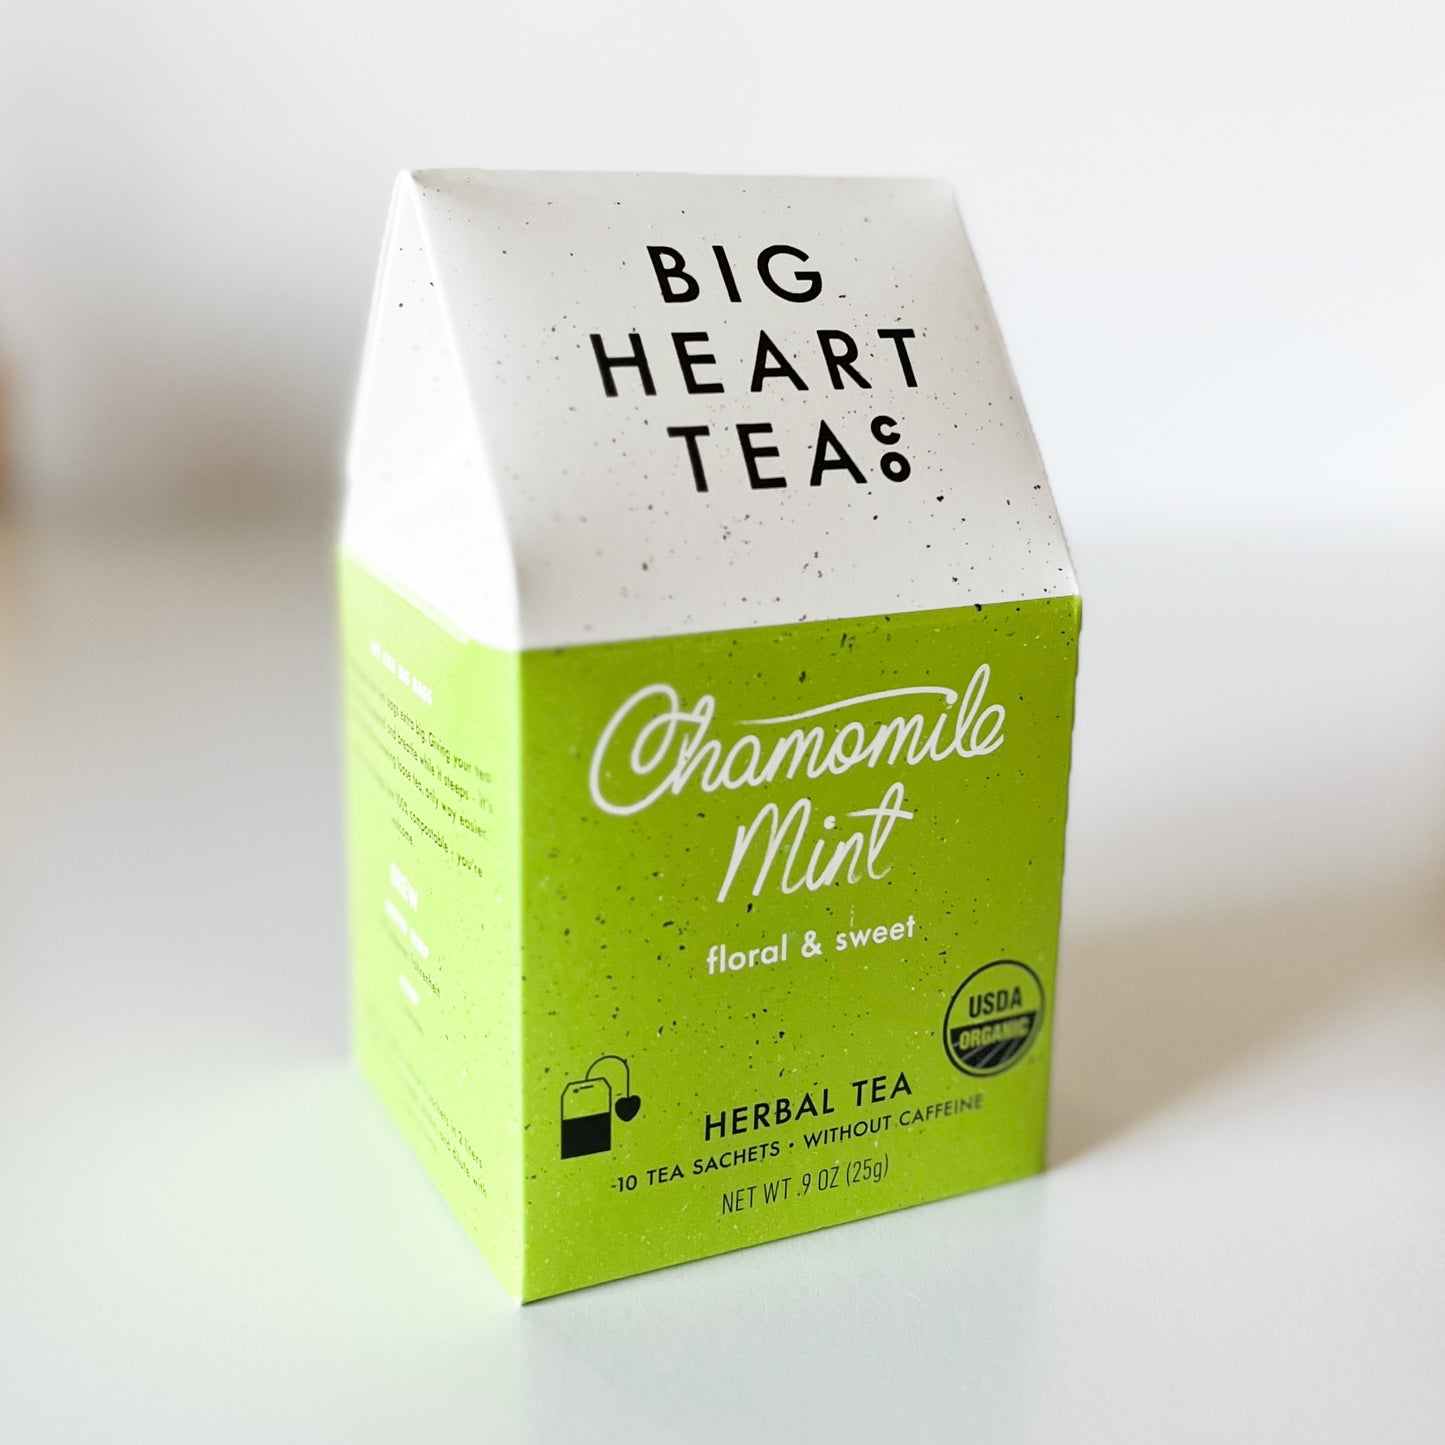 big heart tea co chamomile mint herbal tea, 10 tea sachets 